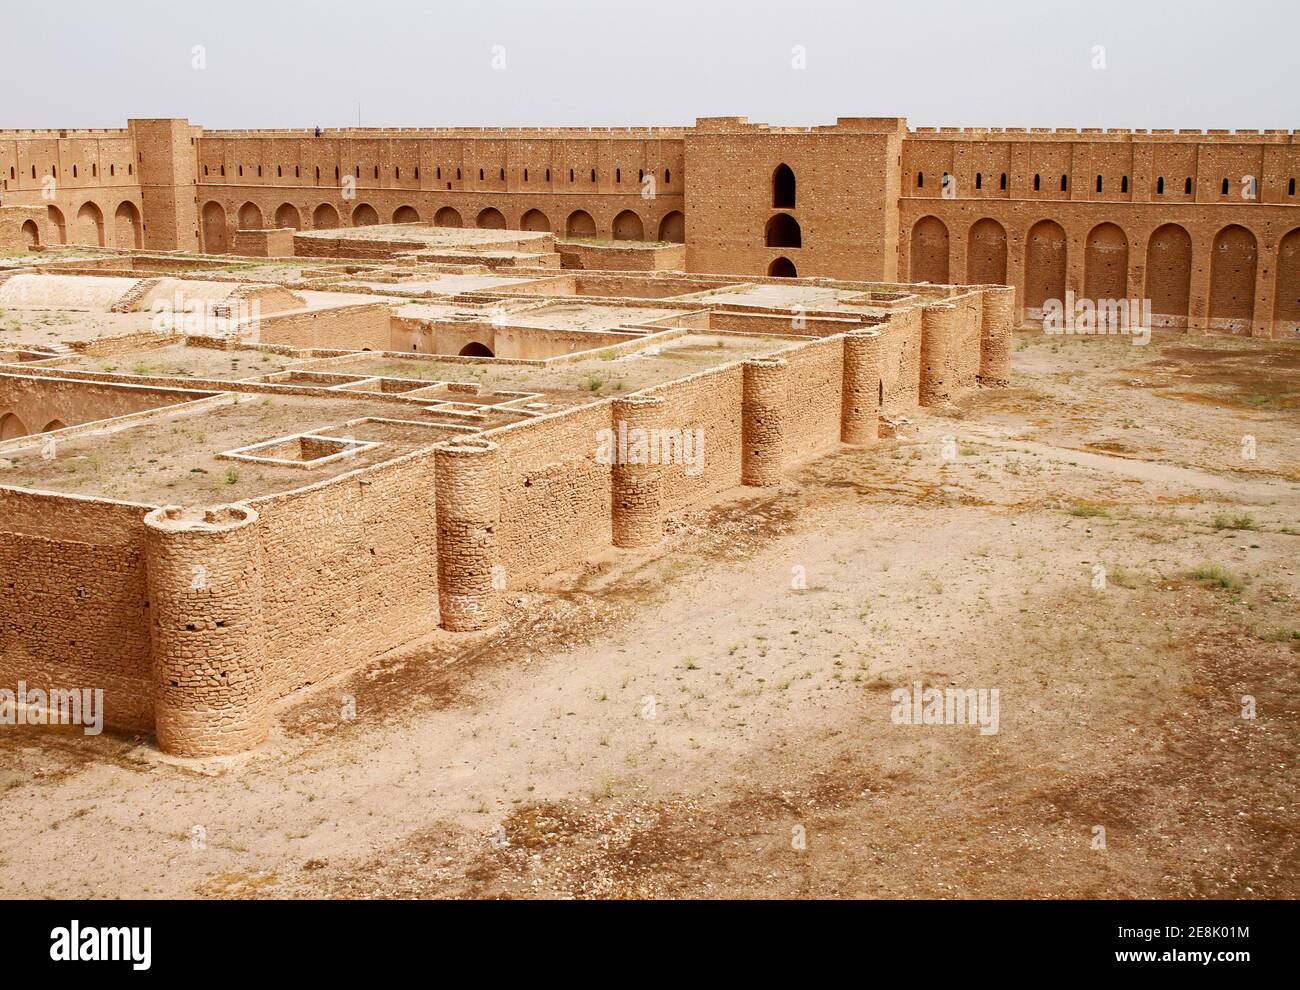 Al Ukhaidir desert fortress near Karbala in Iraq. Stock Photo